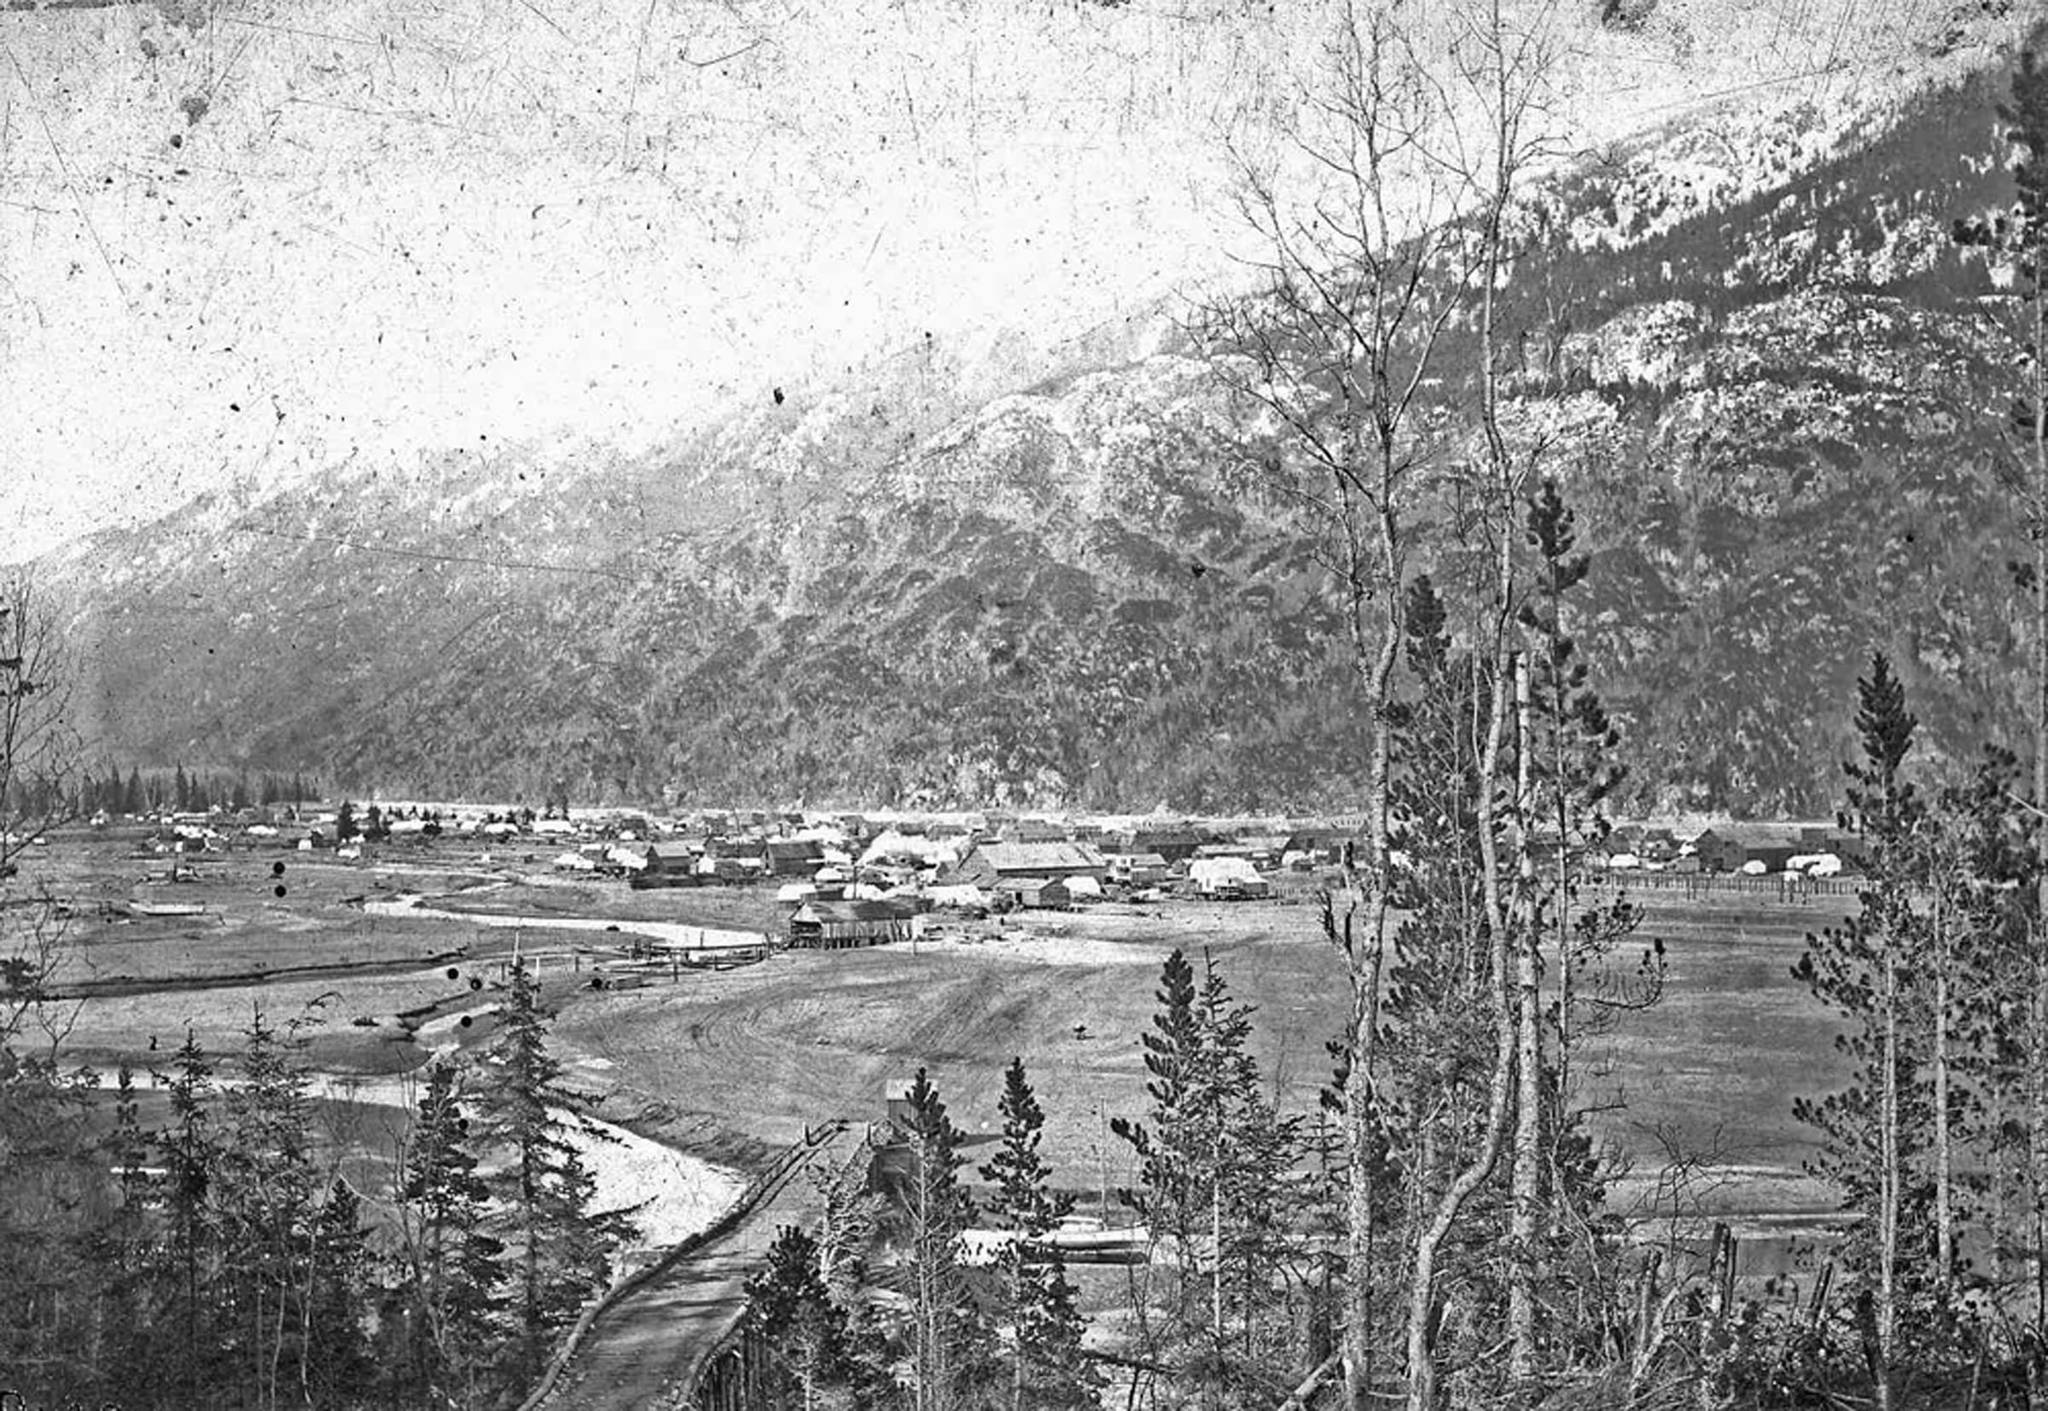 Dyea, Alaska in 1898. (National Park Service, Klondike Gold Rush National Historical Park, Candy Waugaman Collection, KLGO DO-41 8848)